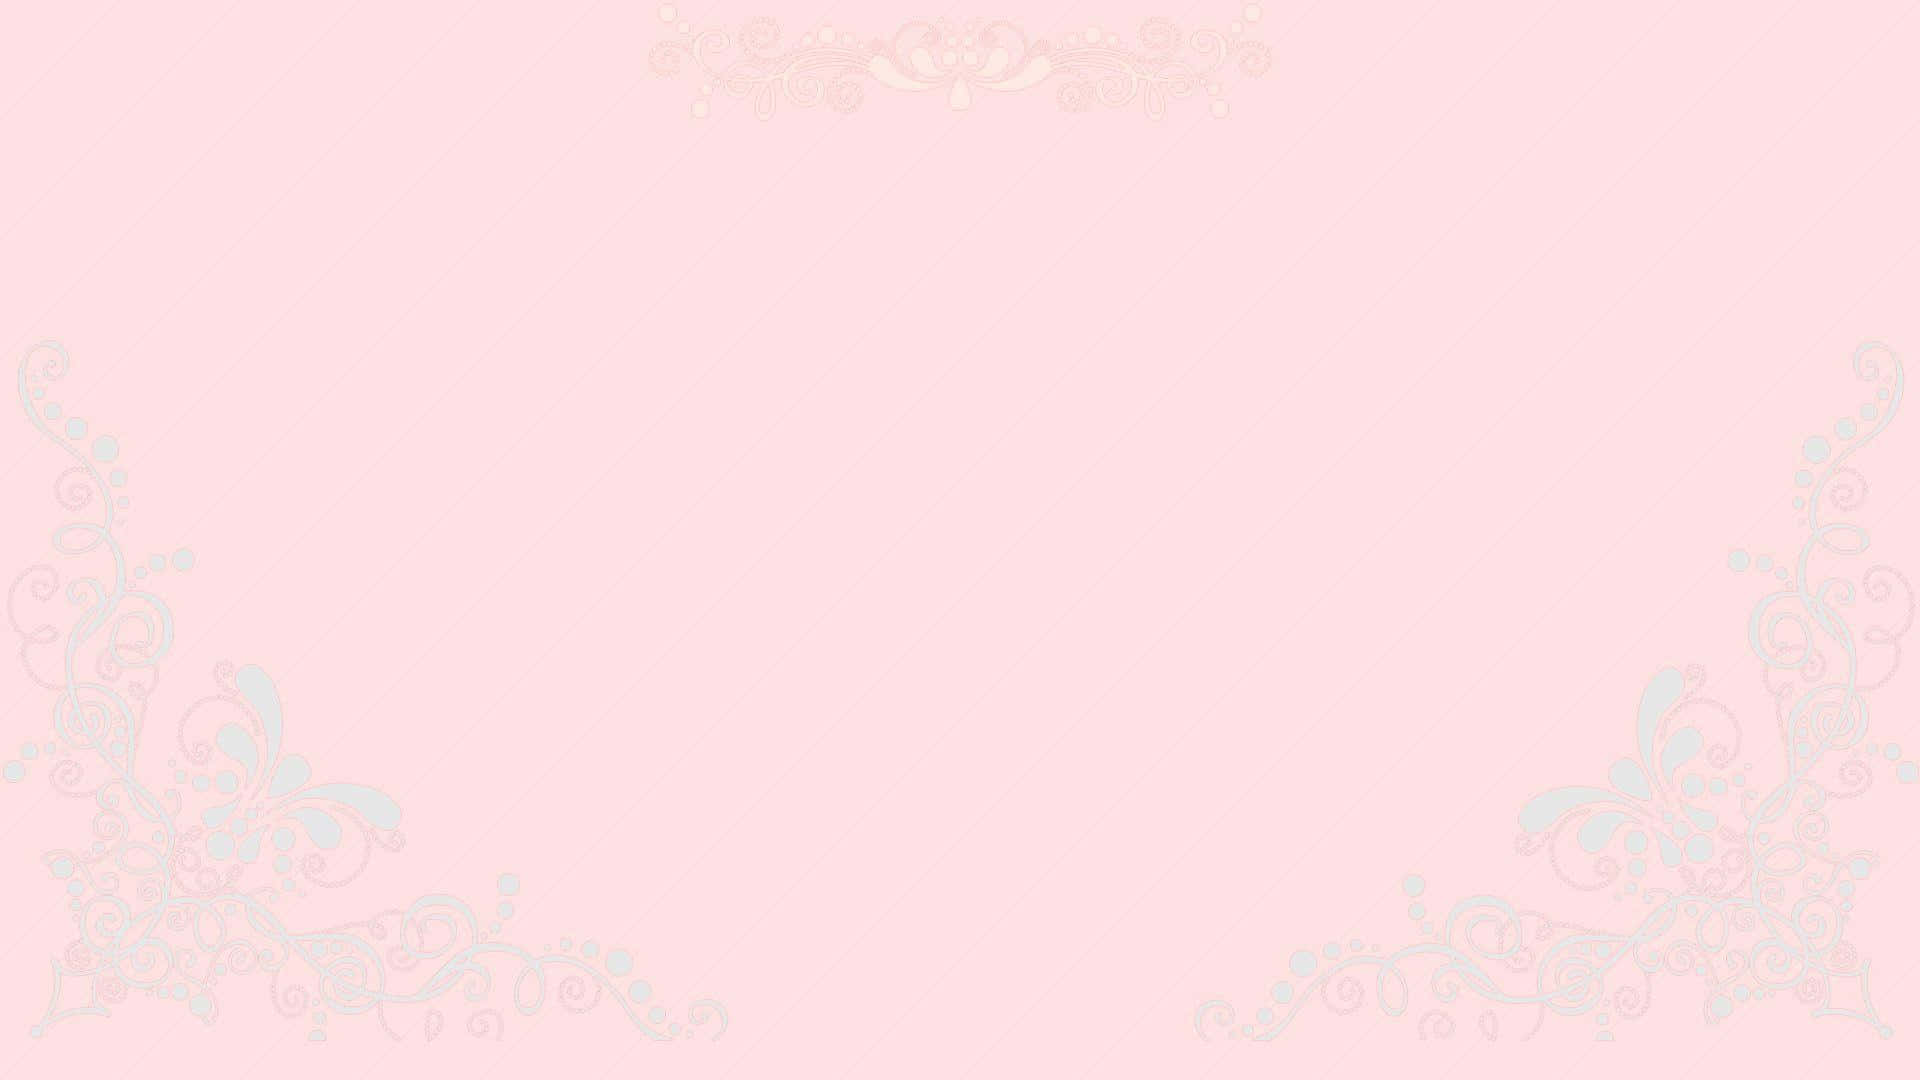 https://wallpapers.com/images/hd/simple-pink-1920-x-1080-background-03apca9qzq9dhbcg.jpg